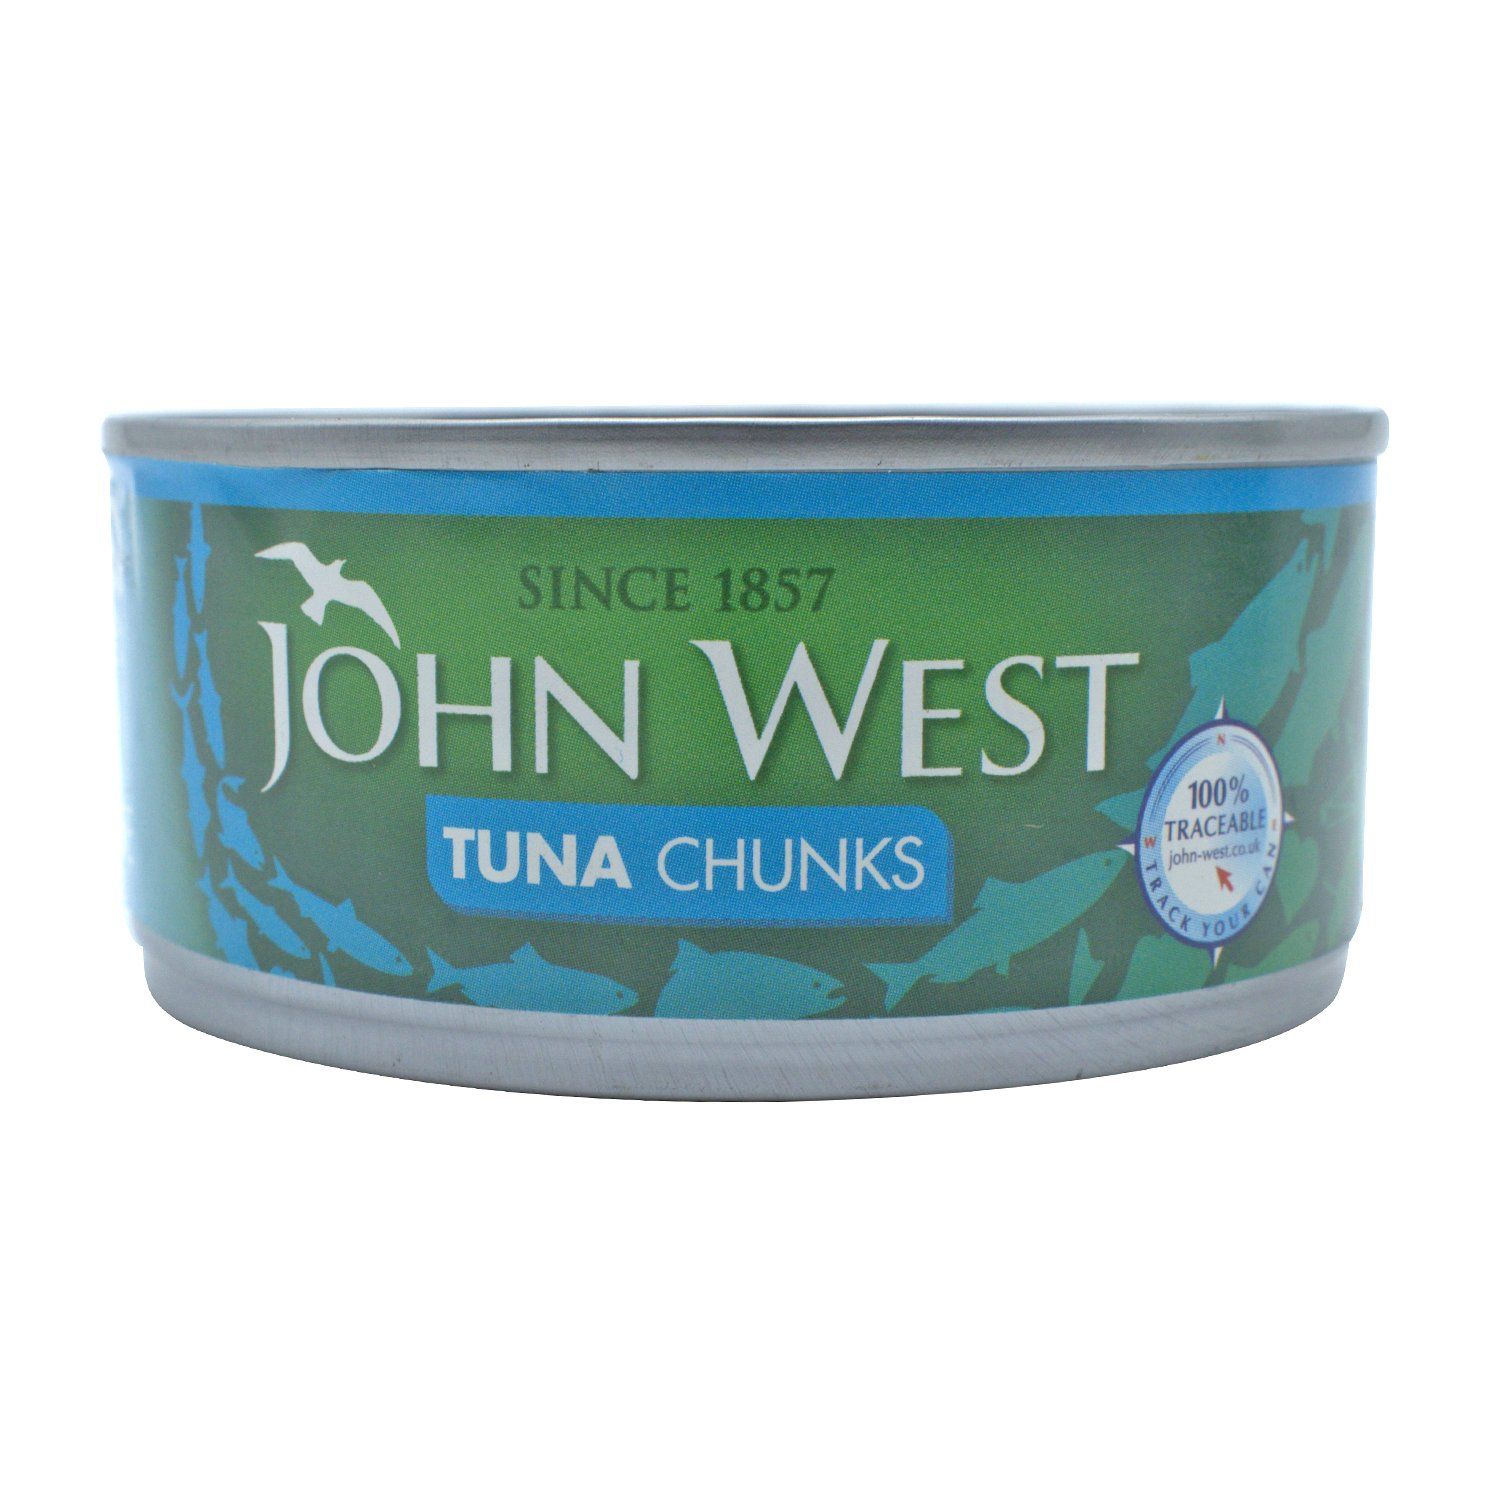 John West Tuna Chunks Brine Image